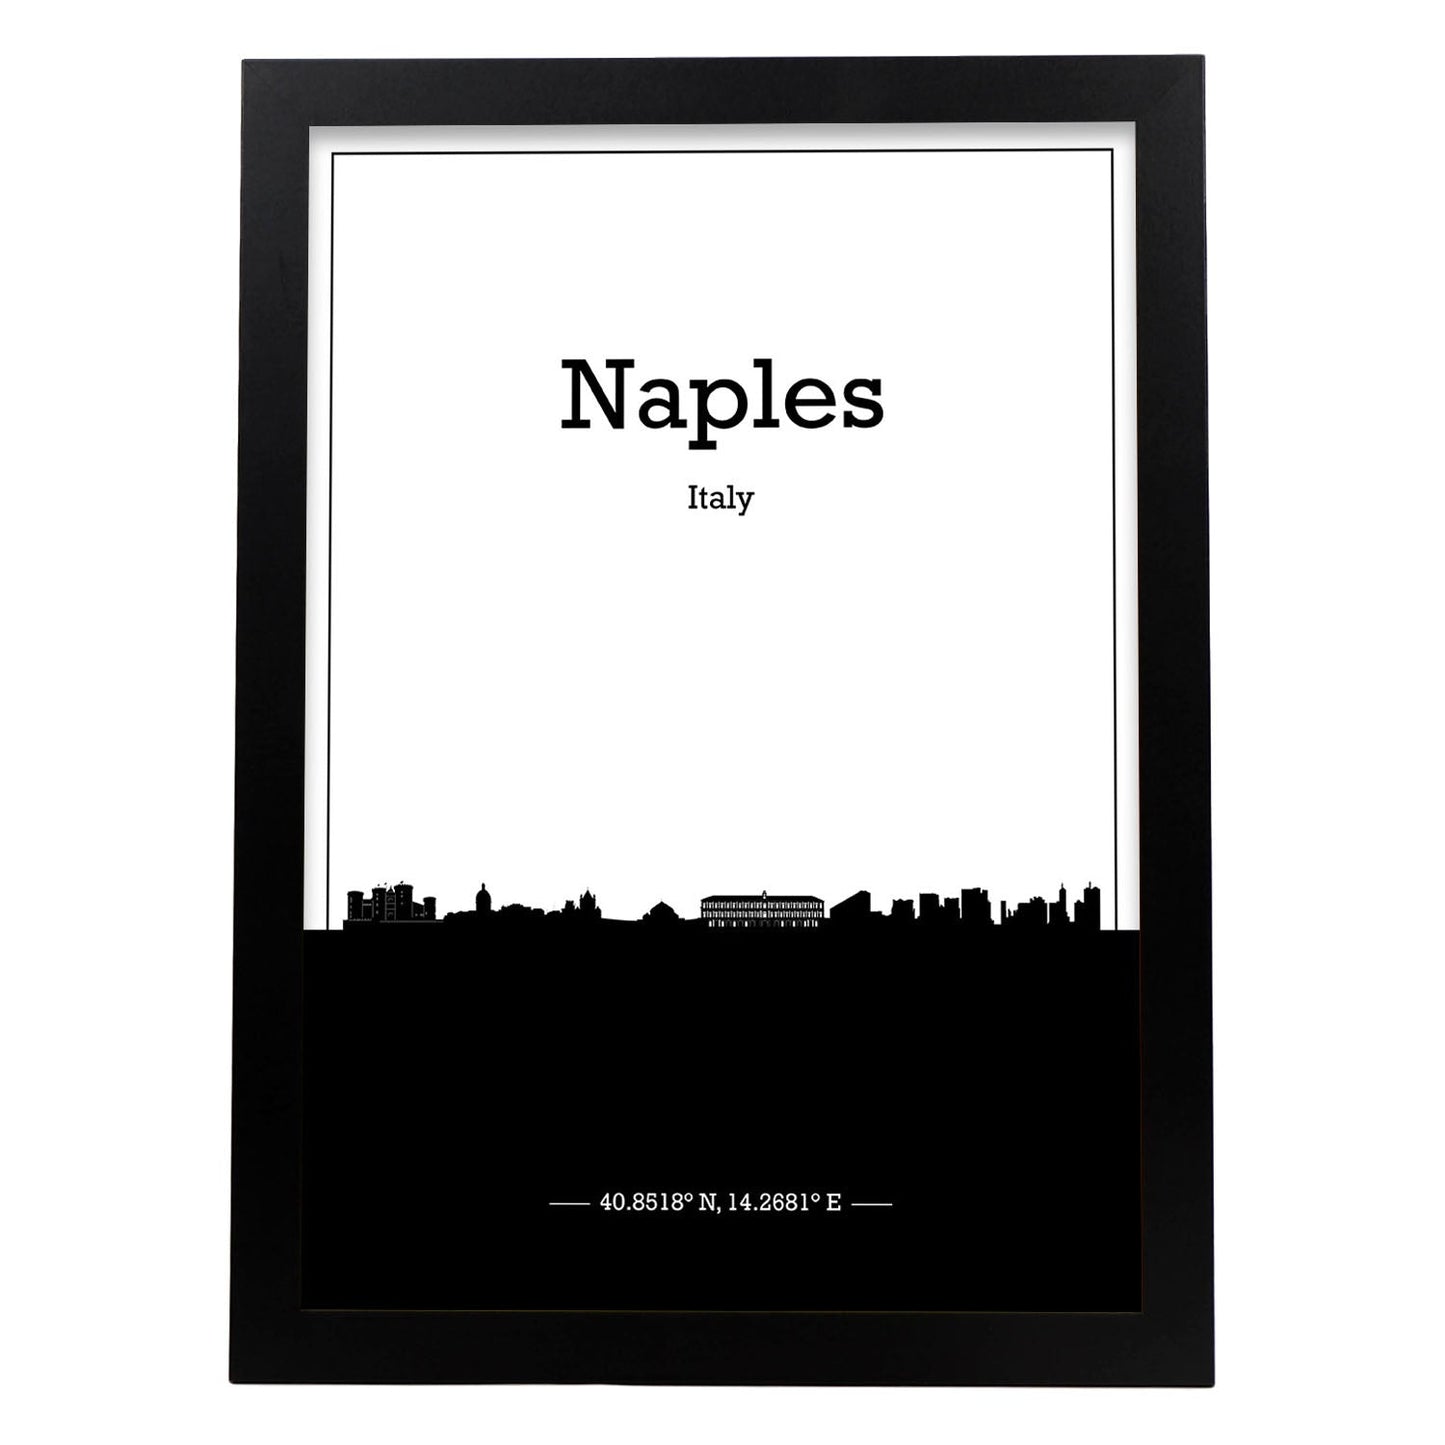 Poster con mapa de Naples - Italia. Láminas con Skyline de ciudades de Italia con sombra negra.-Artwork-Nacnic-A4-Marco Negro-Nacnic Estudio SL